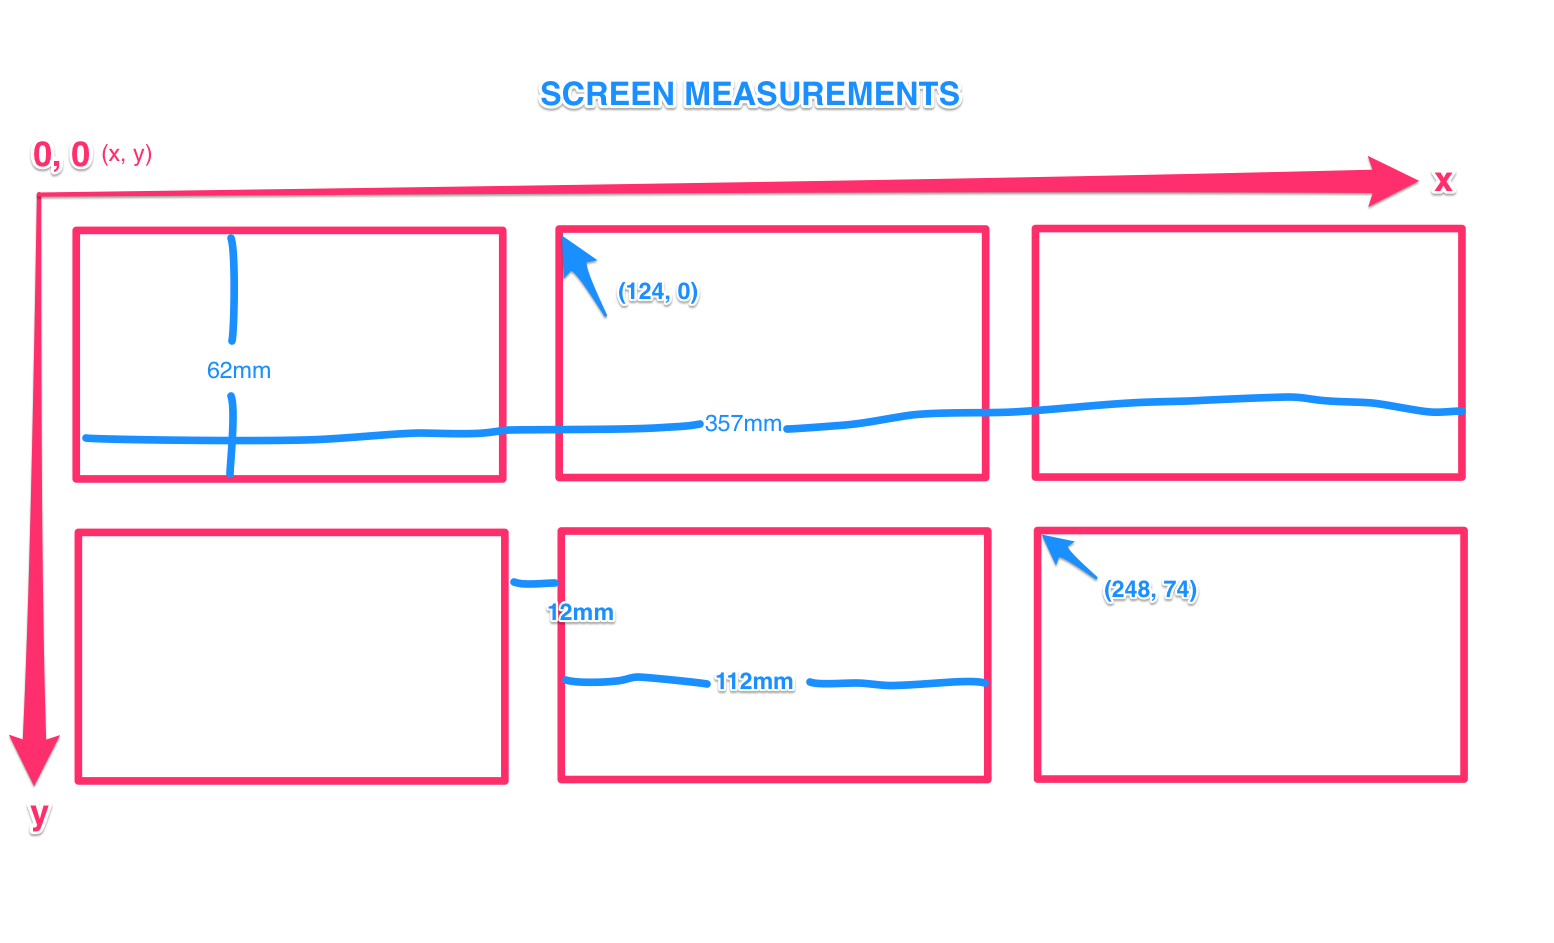 my screen measurements